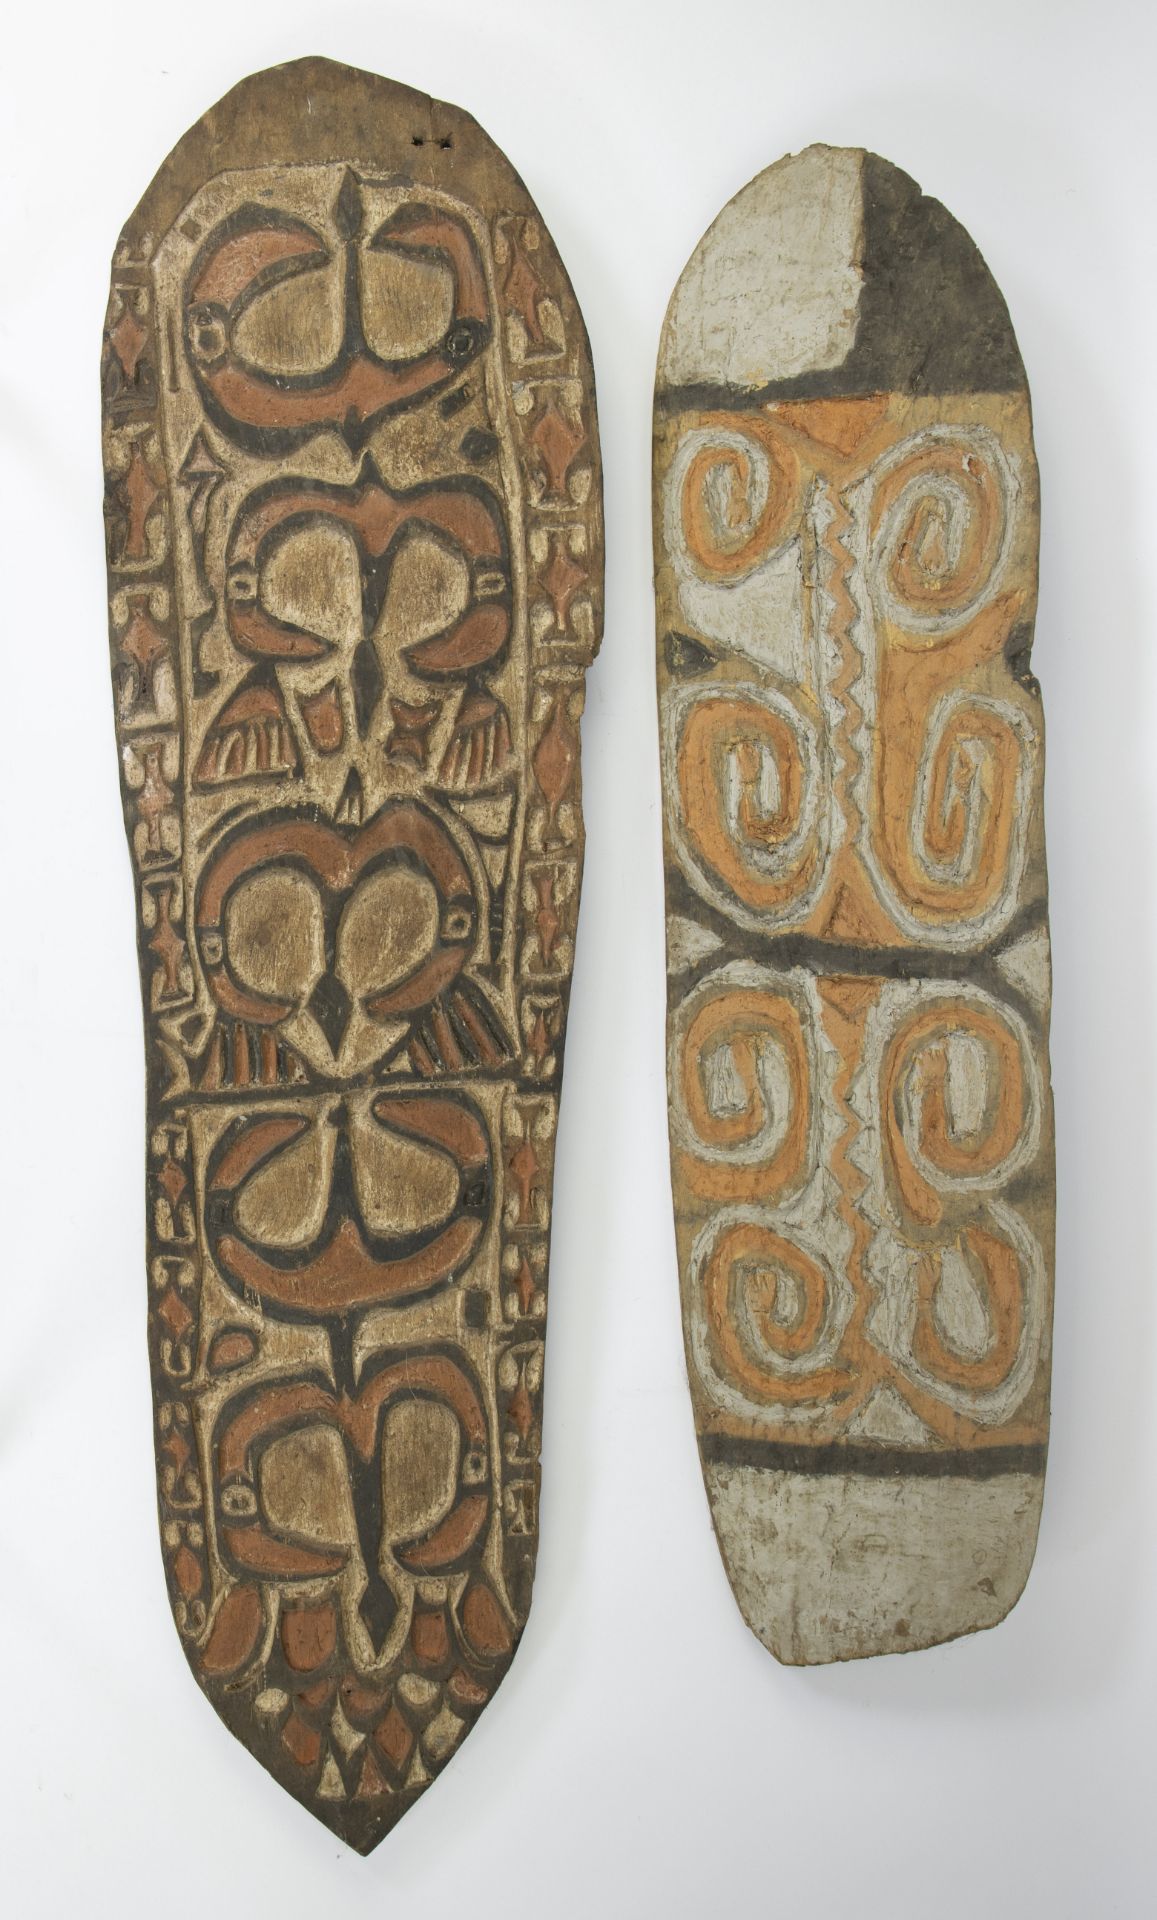 Wooden polychrome shields (2) of the Asmat, wooden reincarnation of ancestors, Papua New Guinea